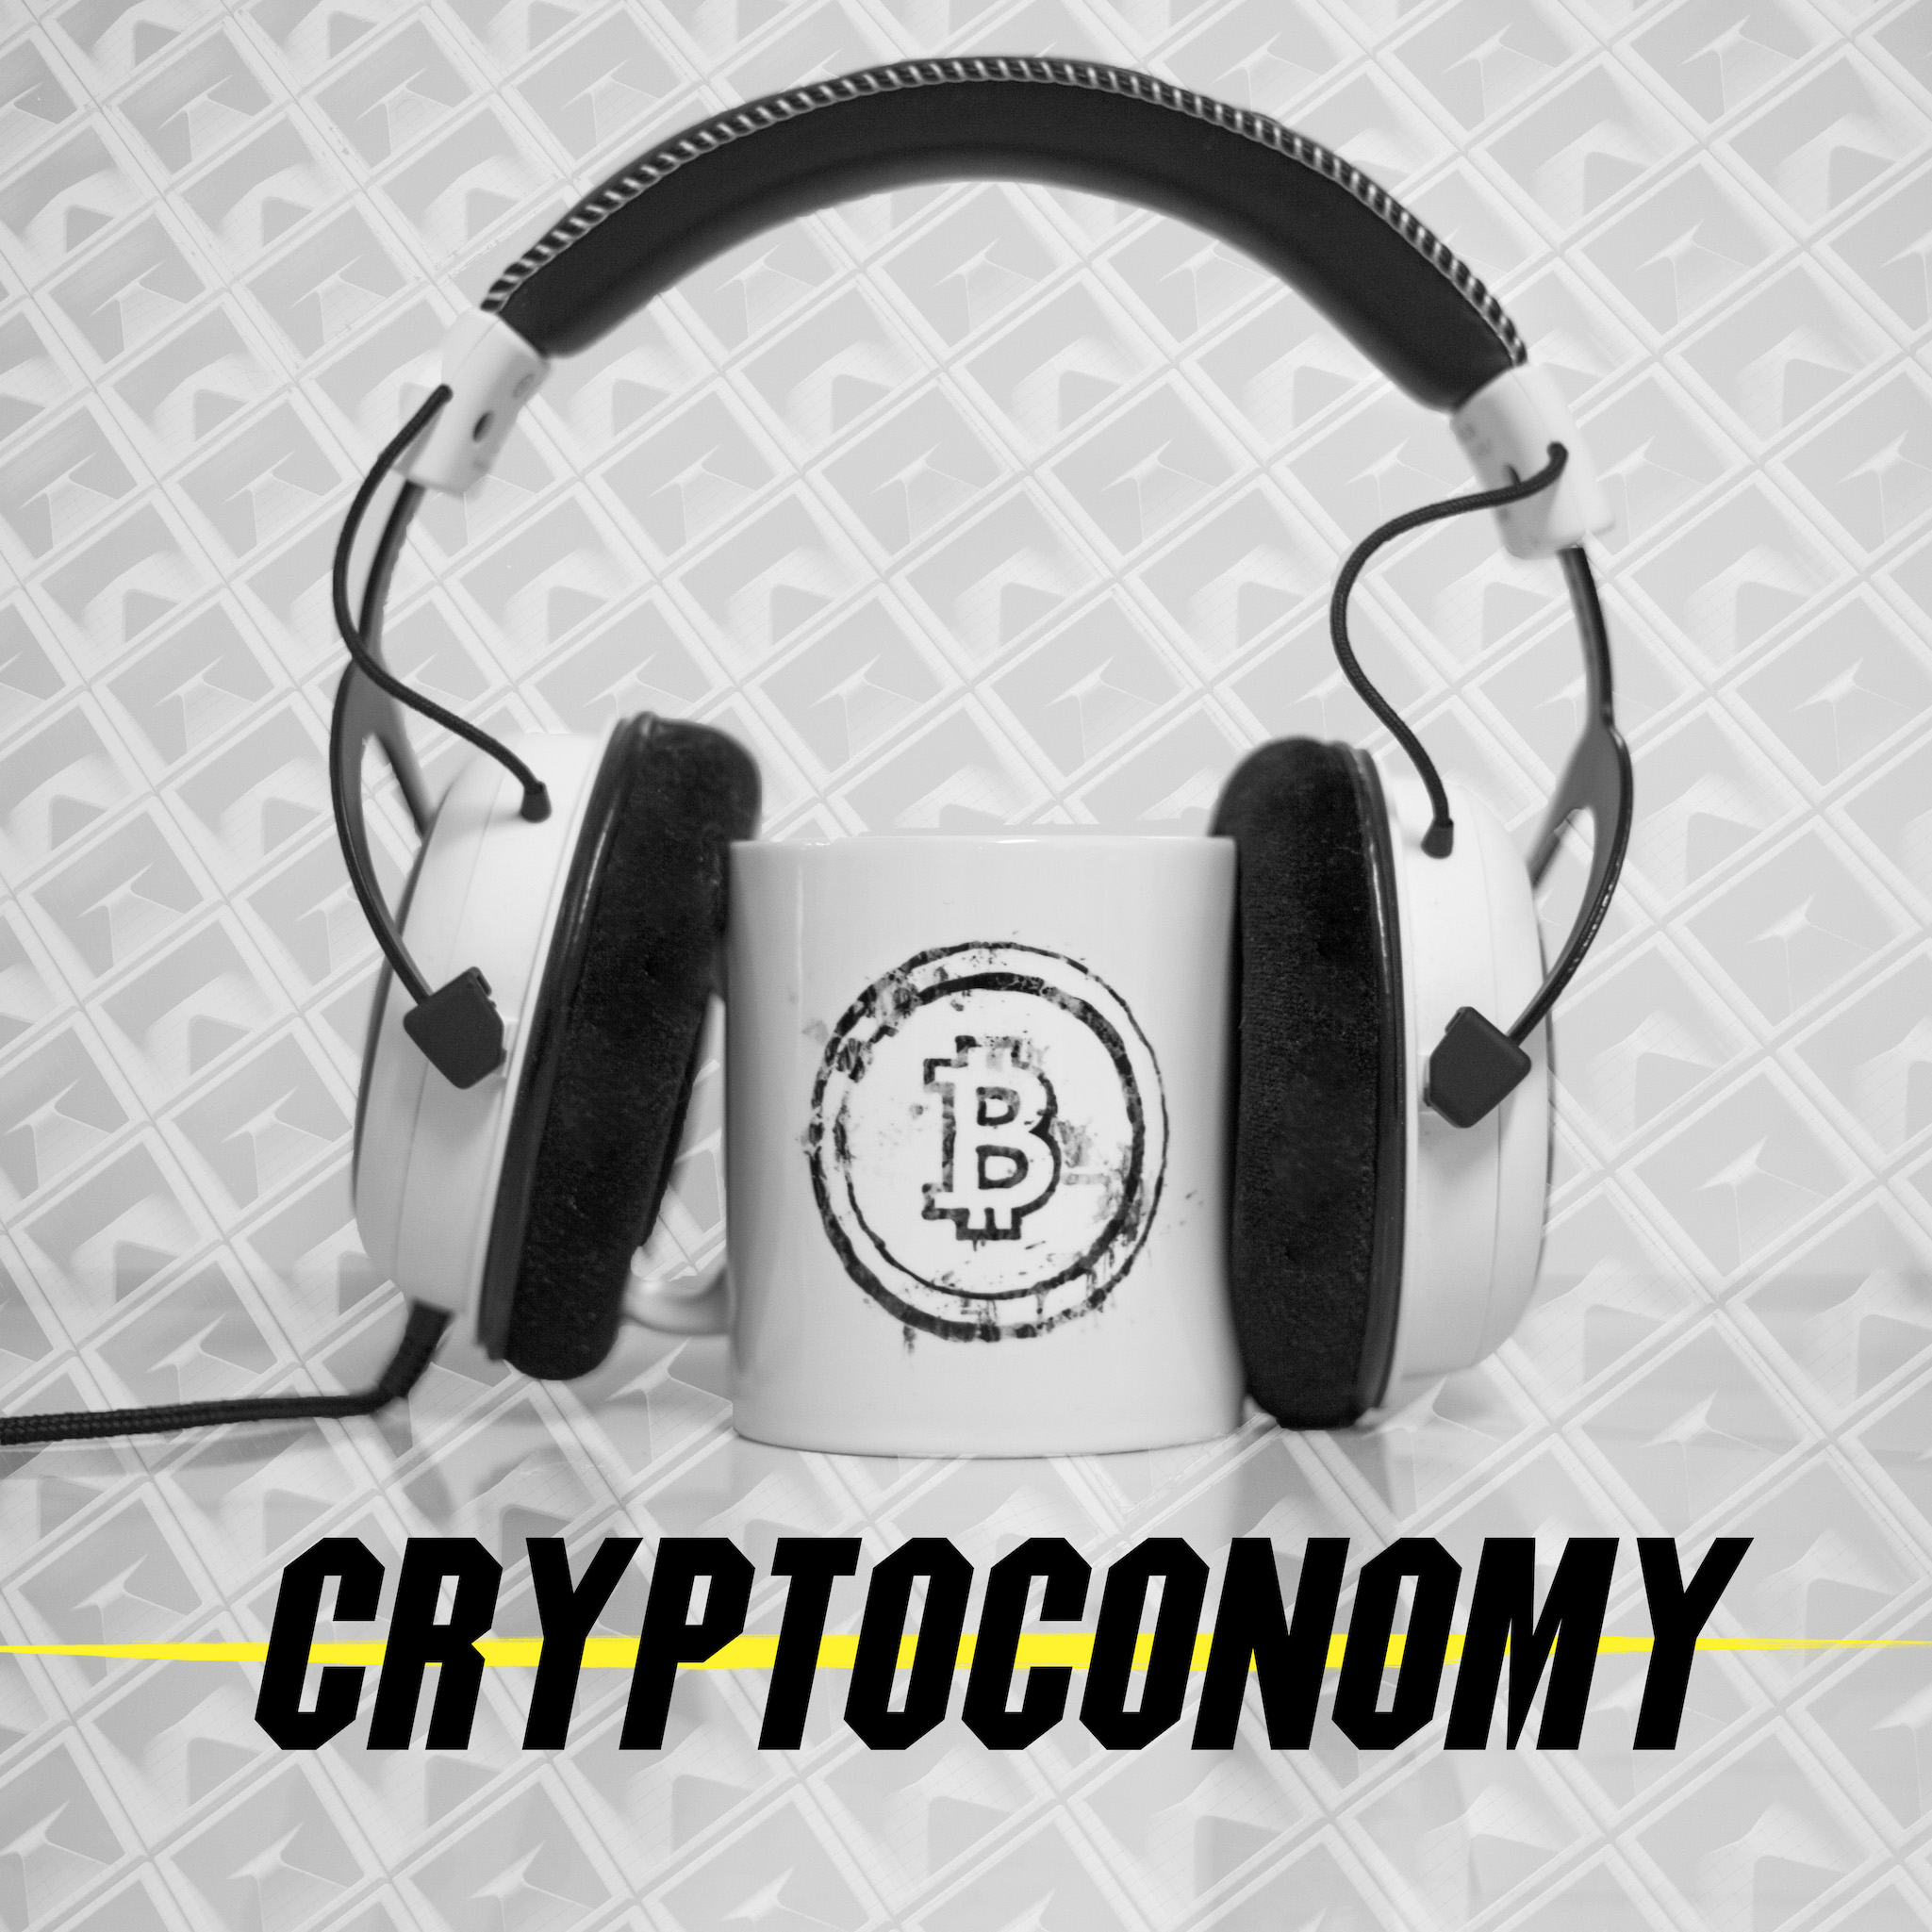 CryptoQuikRead_190 - The Cryptocurrency Phenomenon [Part 5]